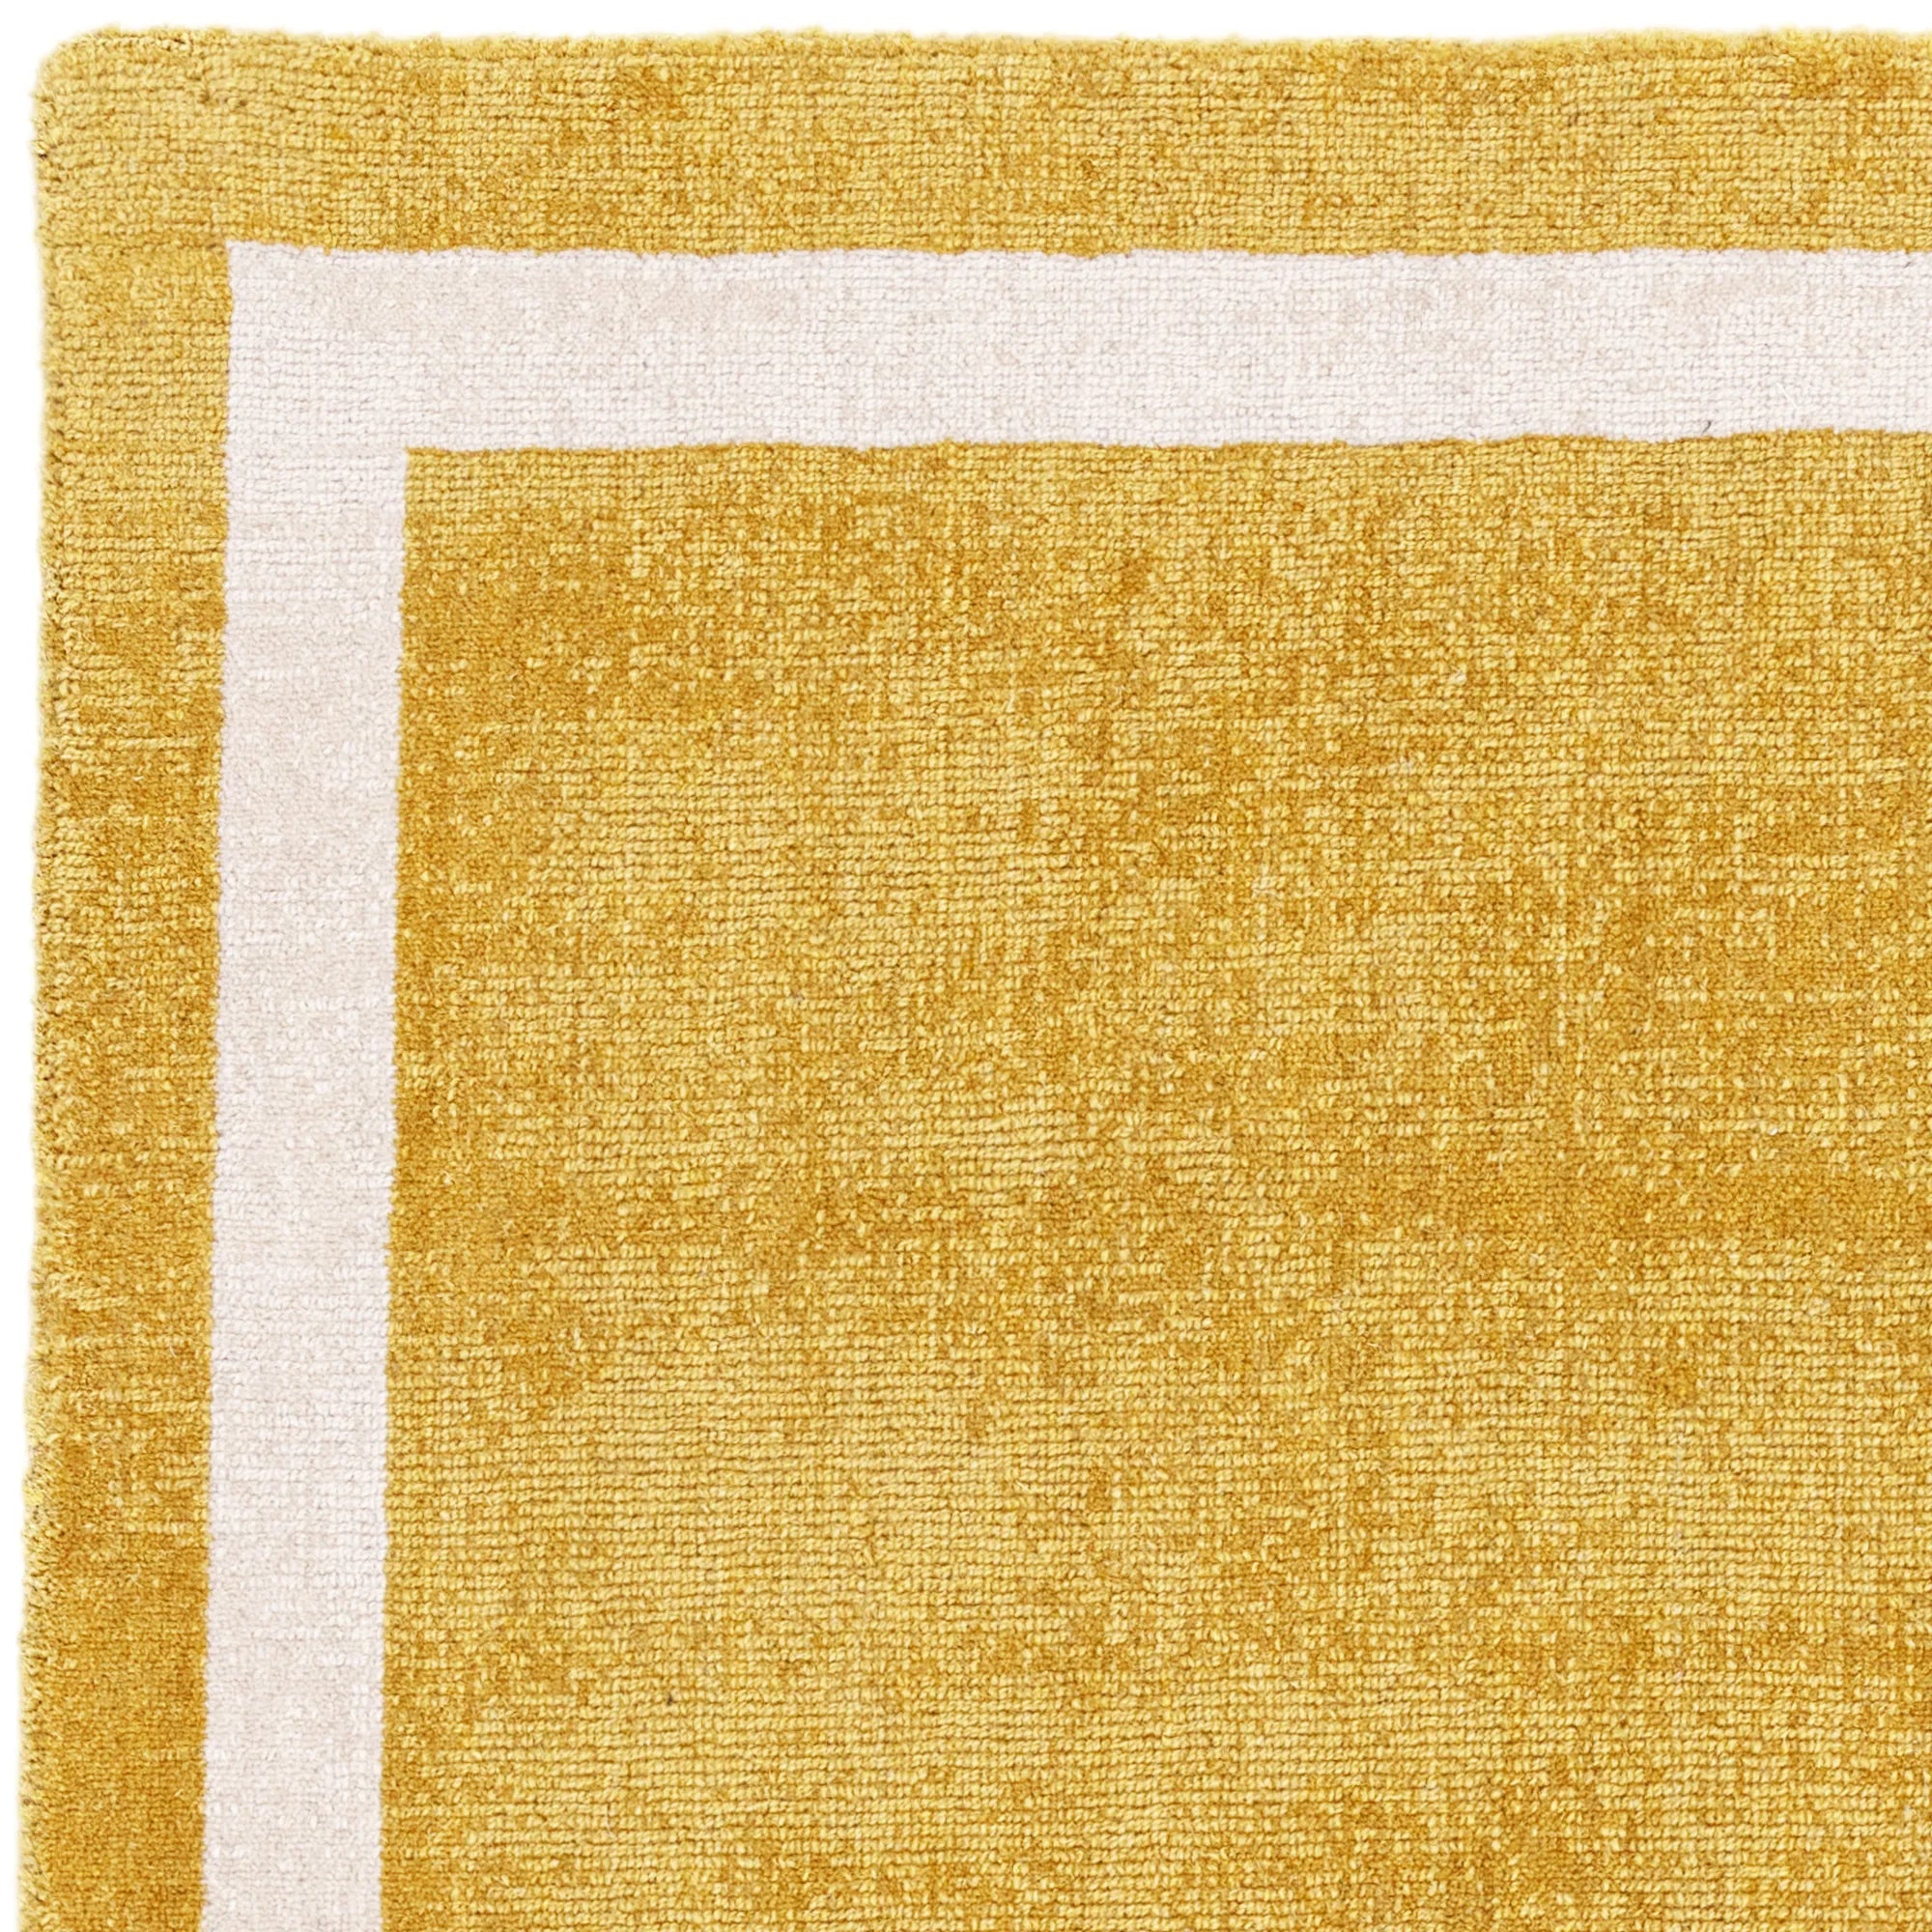 Modern yellow border style rug